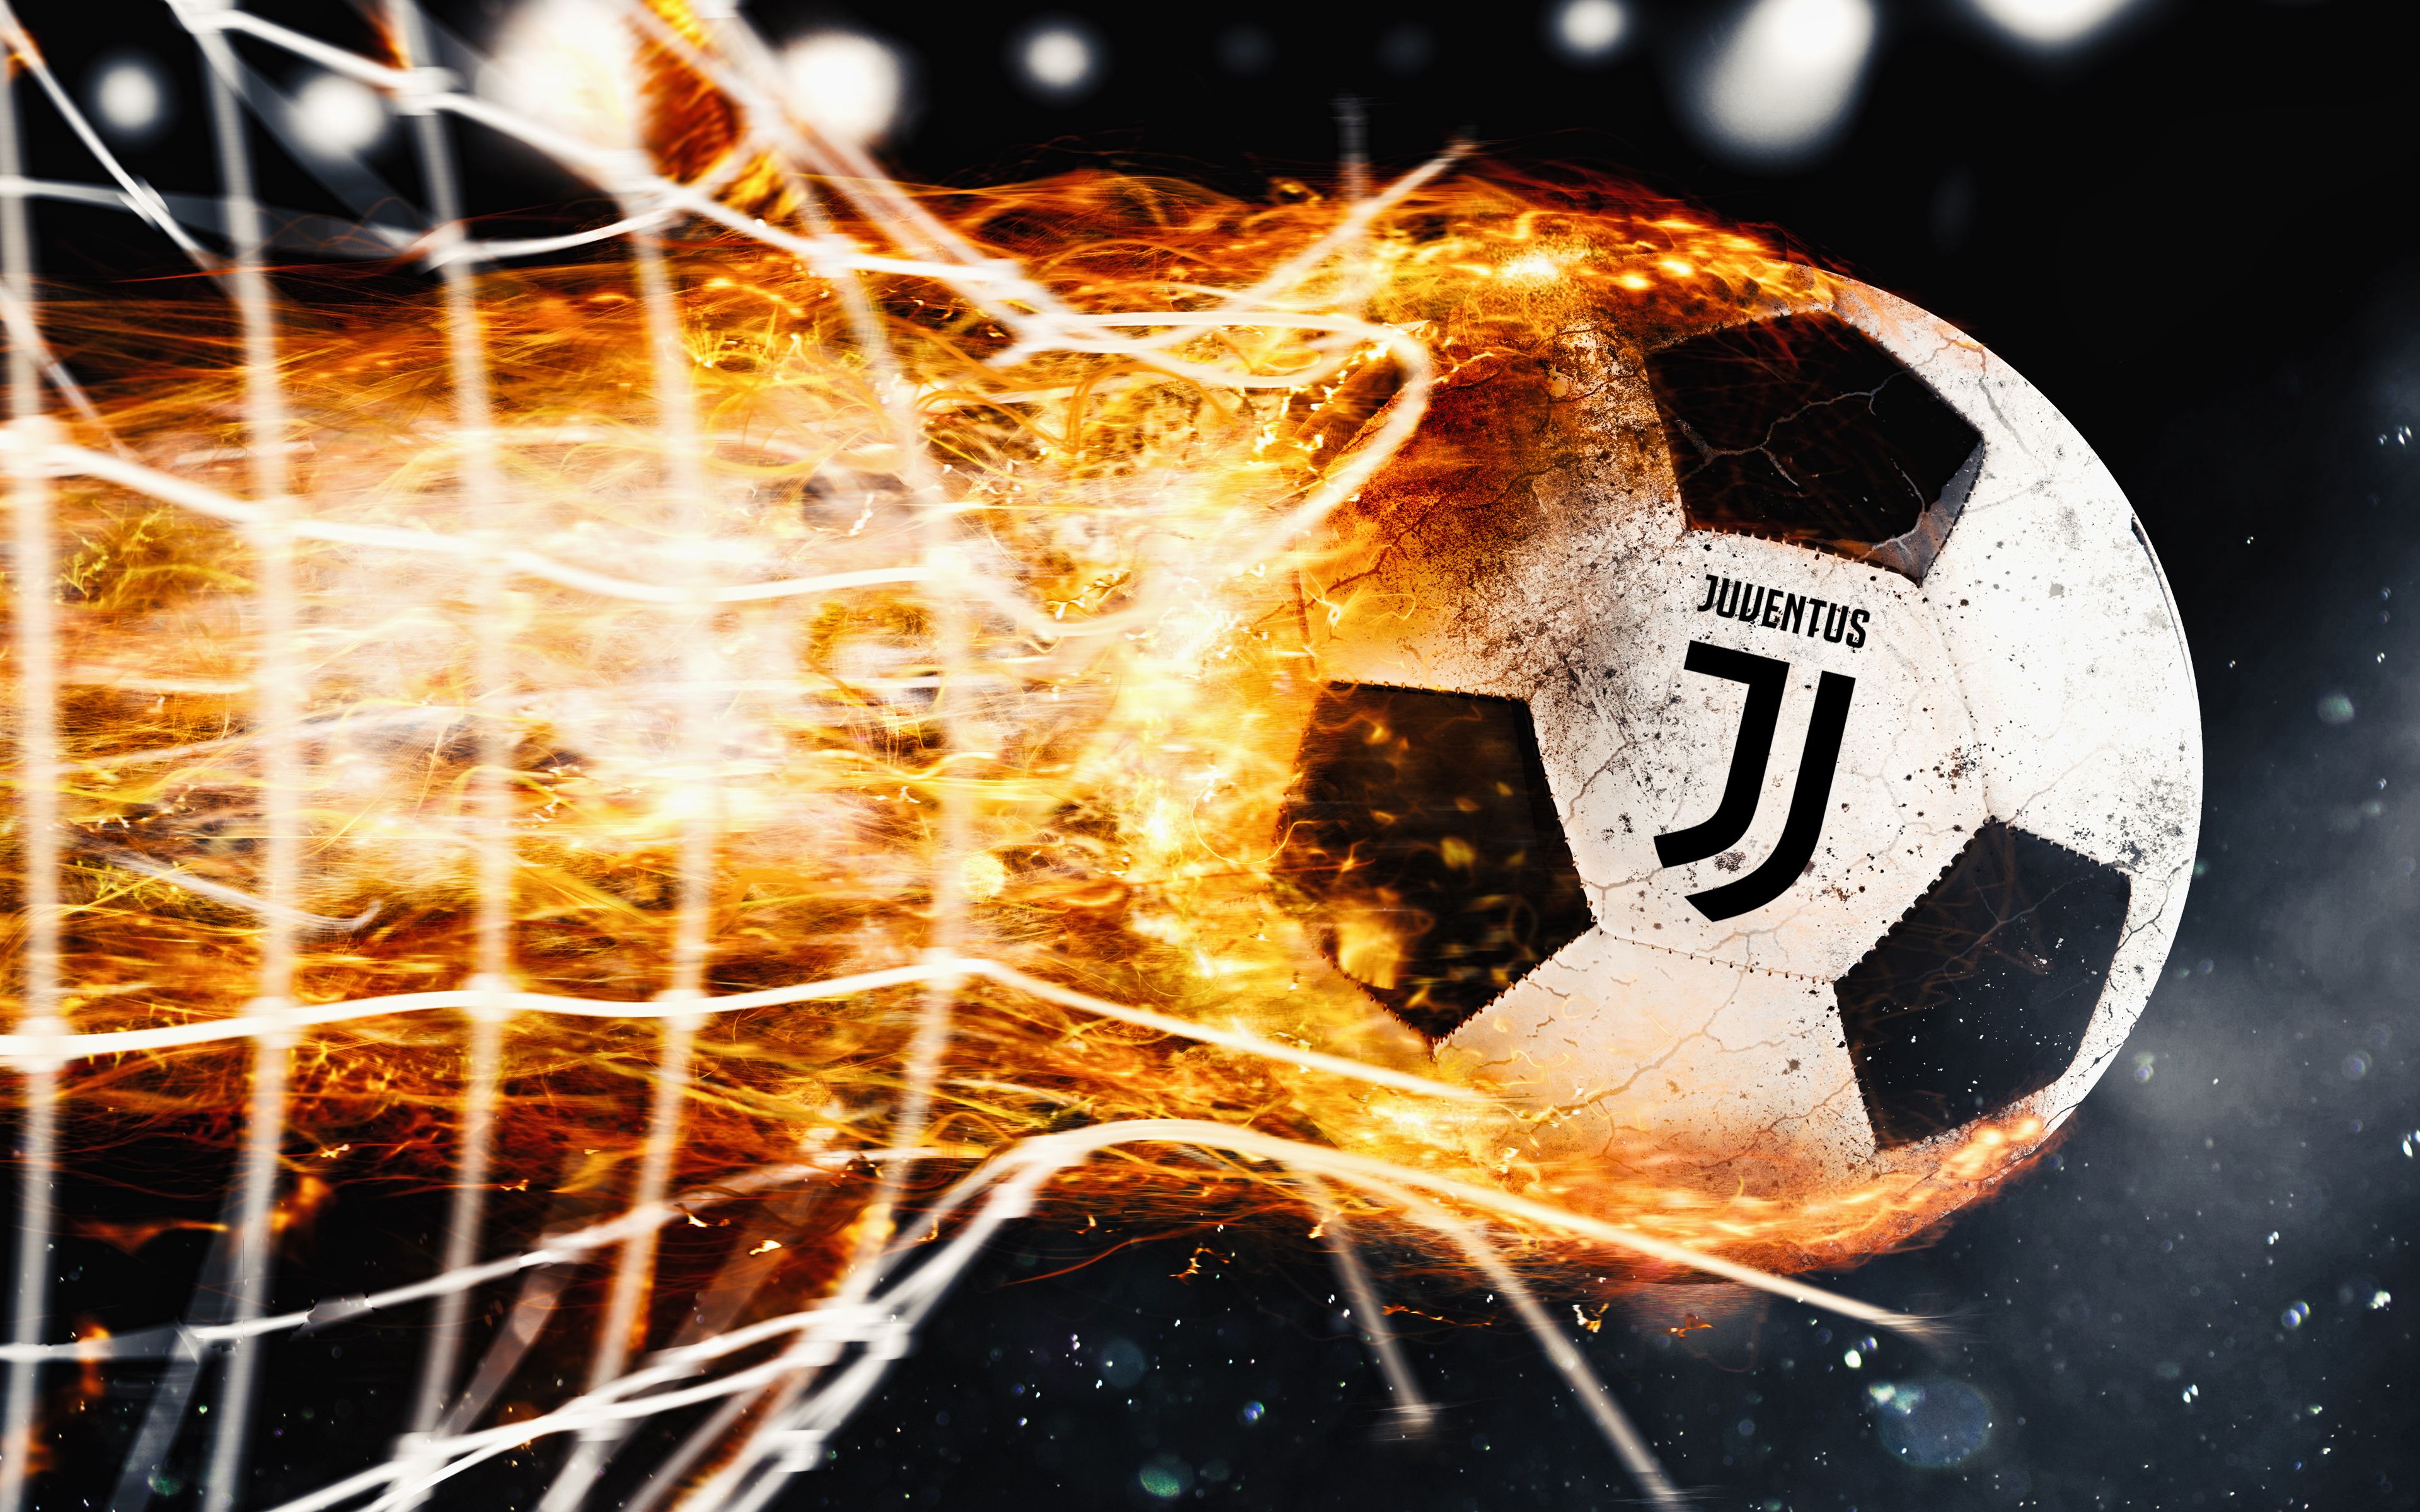 Download wallpaper Juventus, 4k, fire, new logo, flame, Juve, Serie